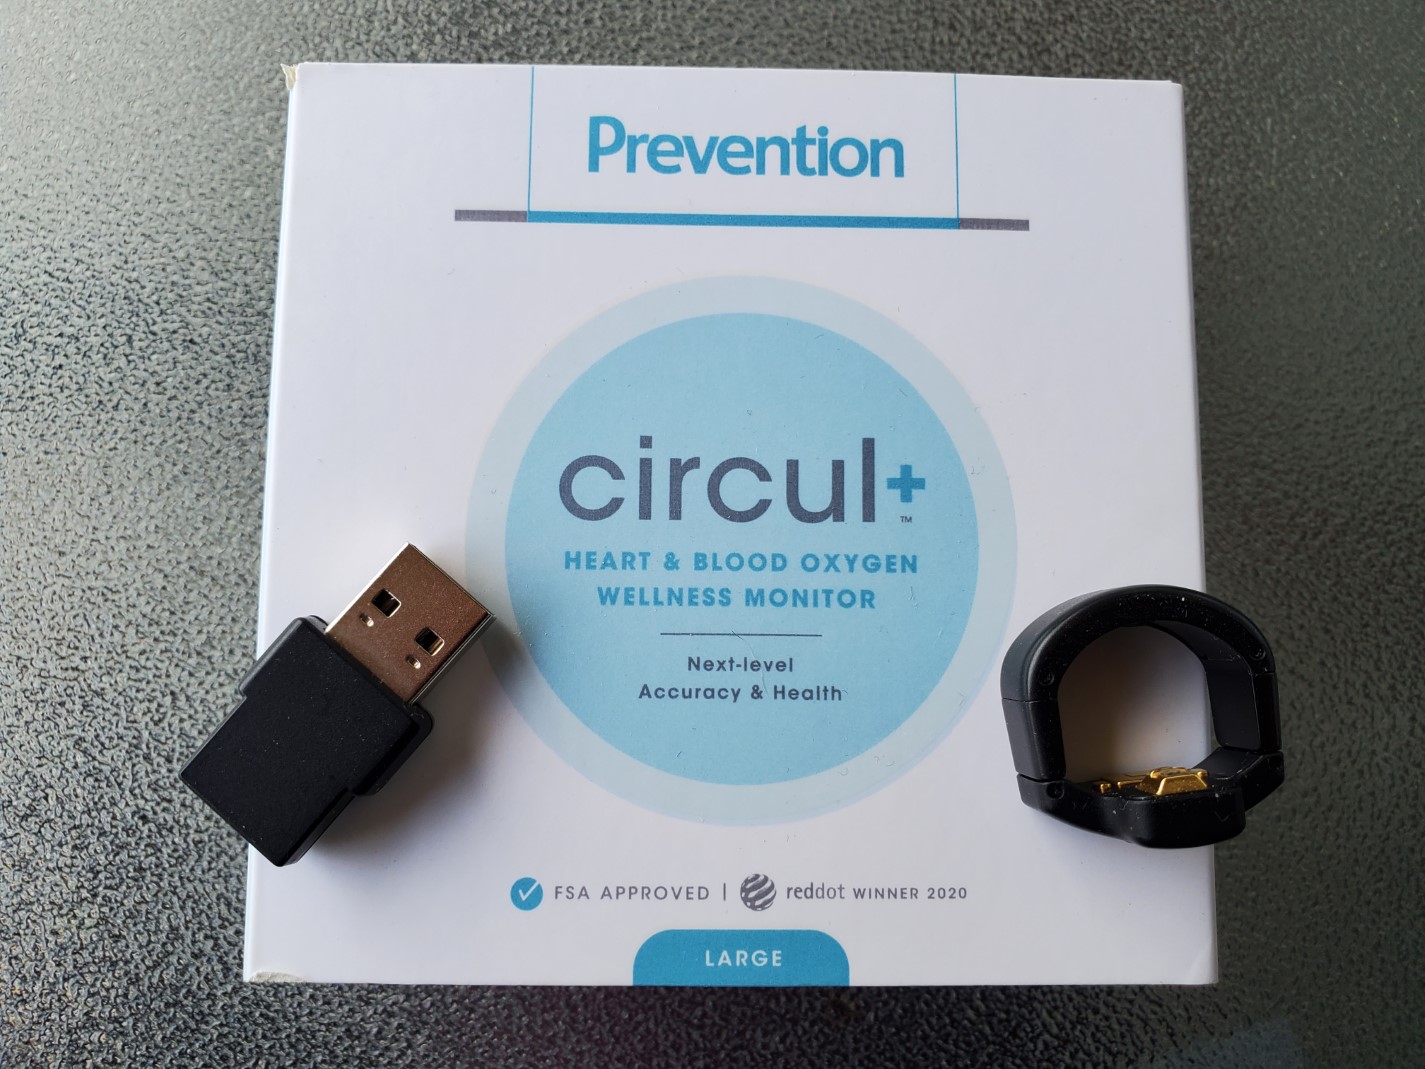 prevention-circul-plus-ring-2.jpg